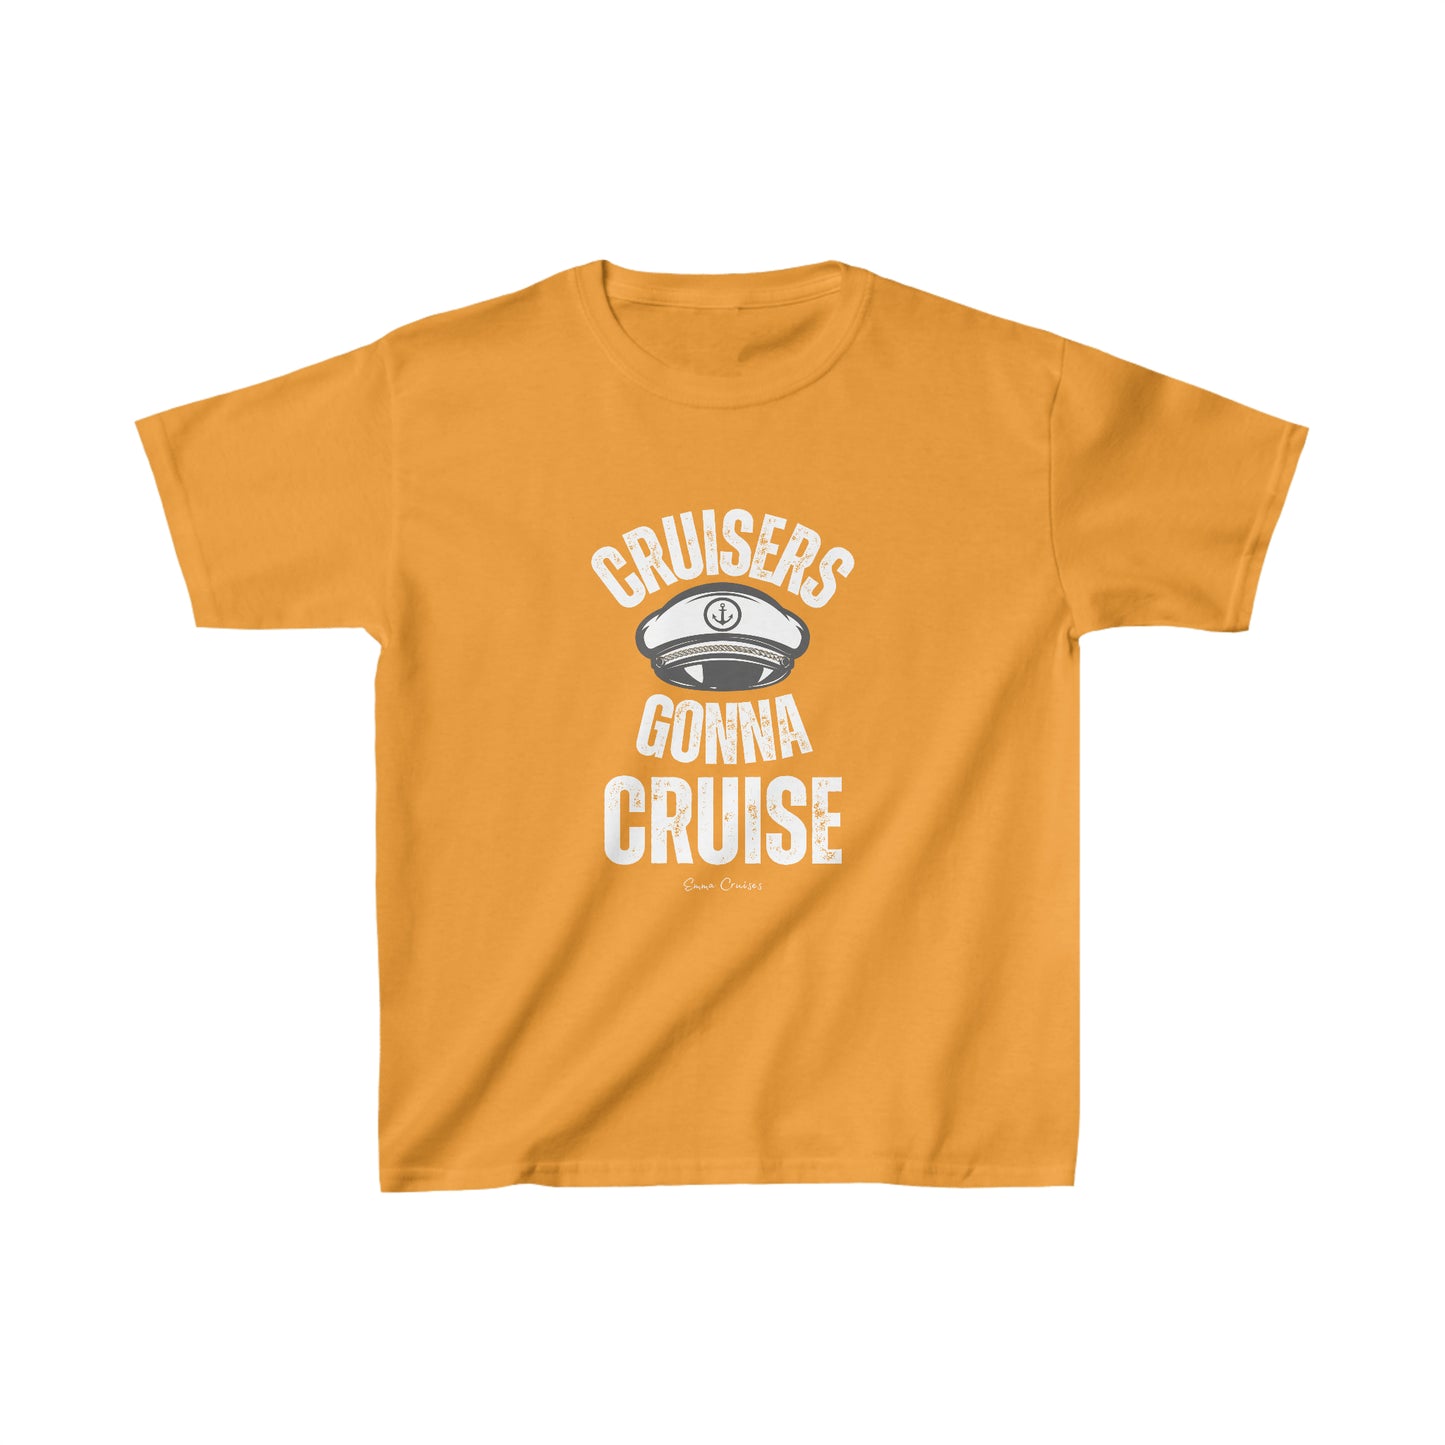 Cruisers Gonna Cruise - Kids UNISEX T-Shirt